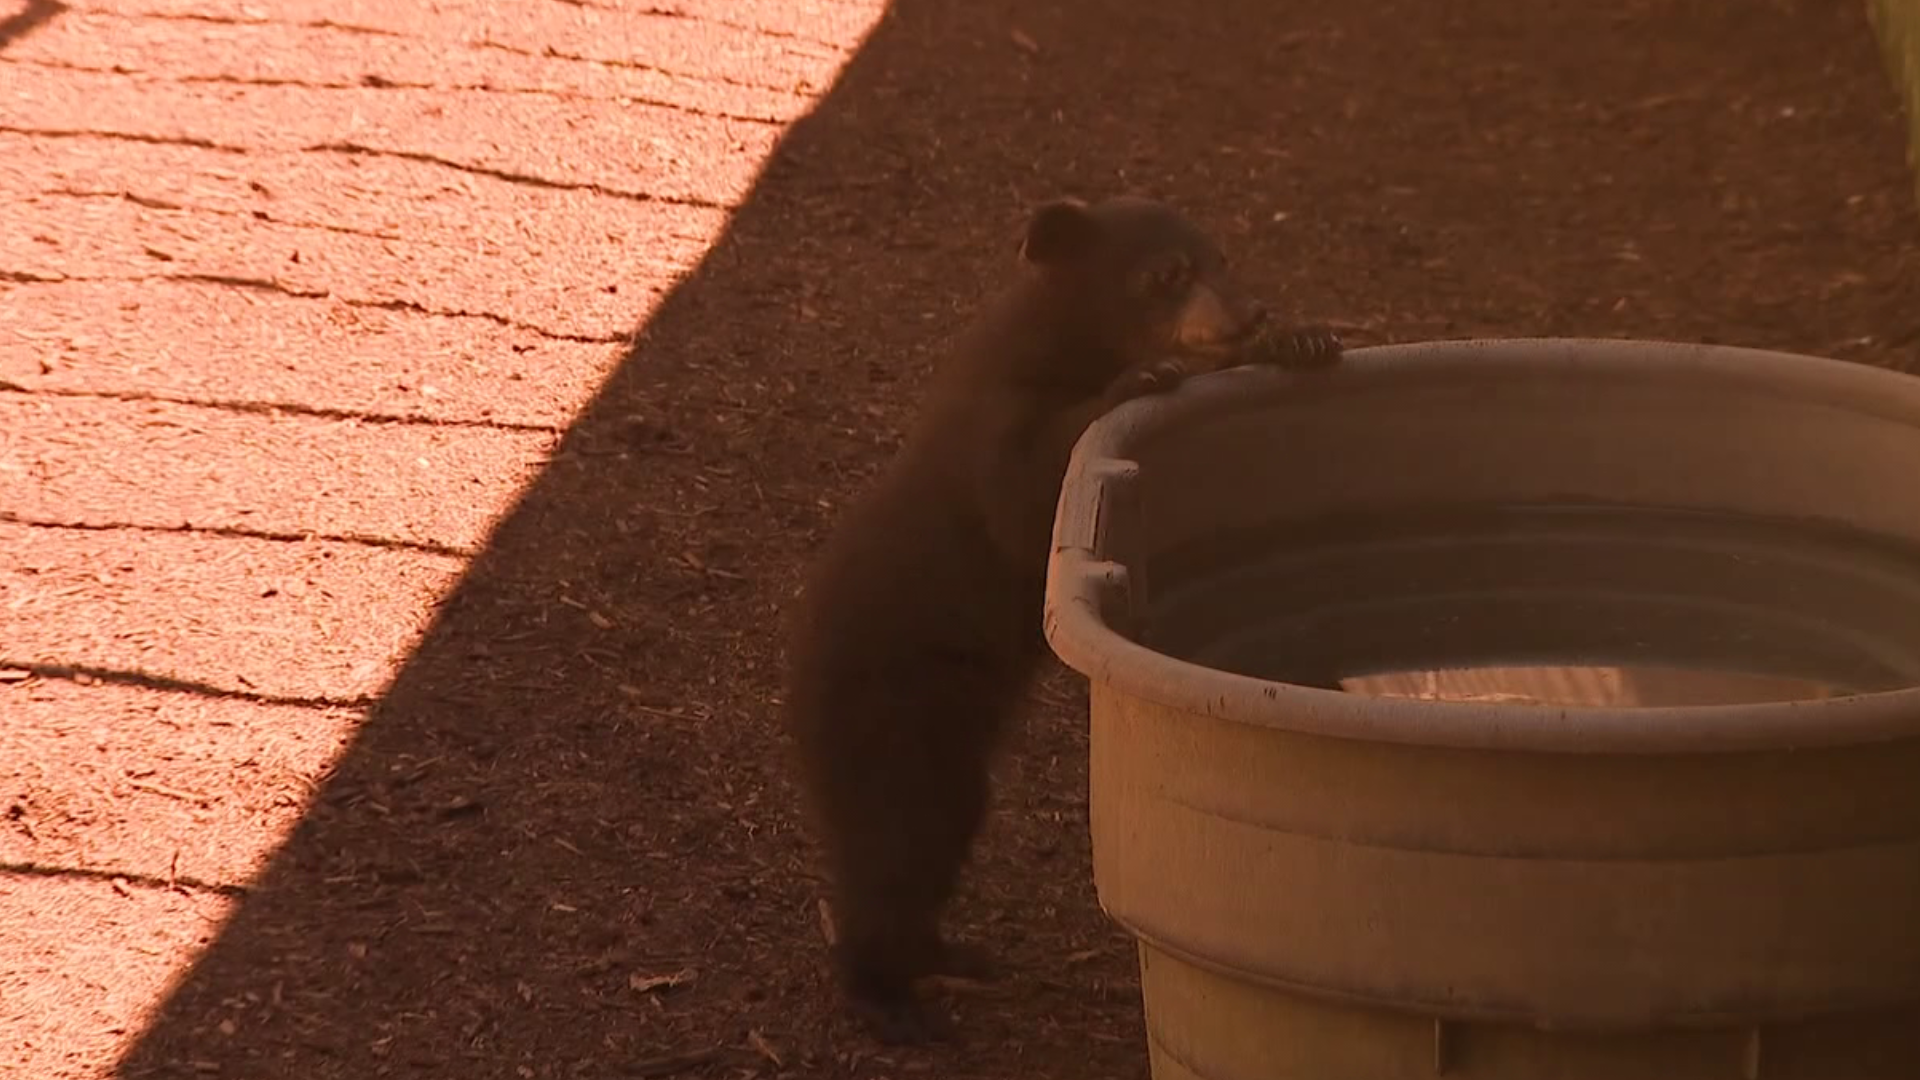 Pocono Wildlife Rehabilitation and Education Center near Stroudsburg showed off its near bear cub enclosure.